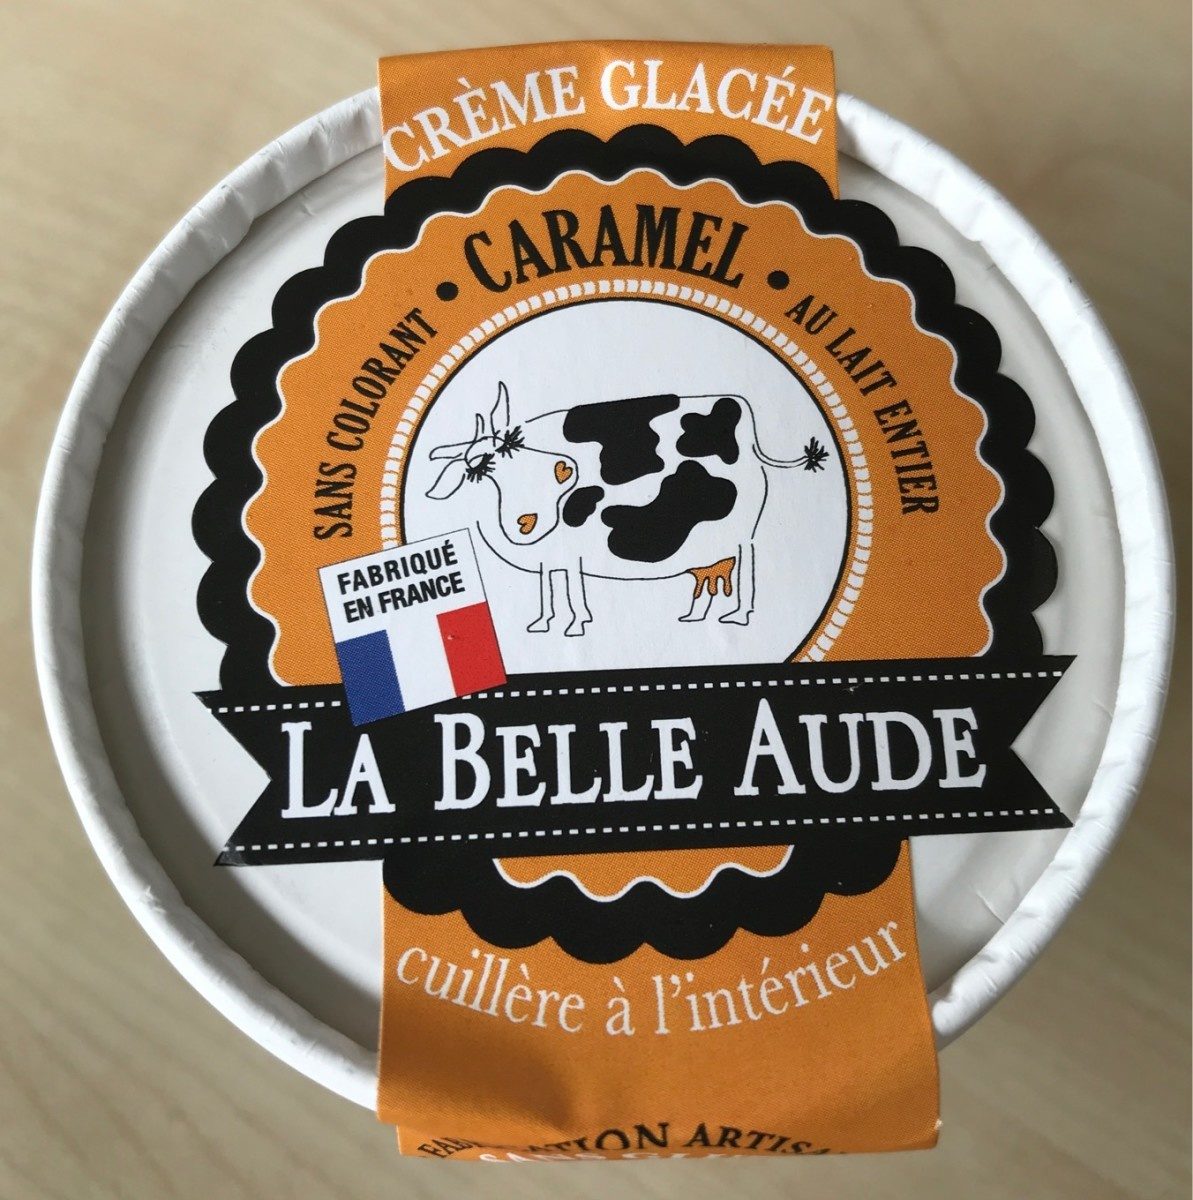 Crème glacée Caramel - Product - fr